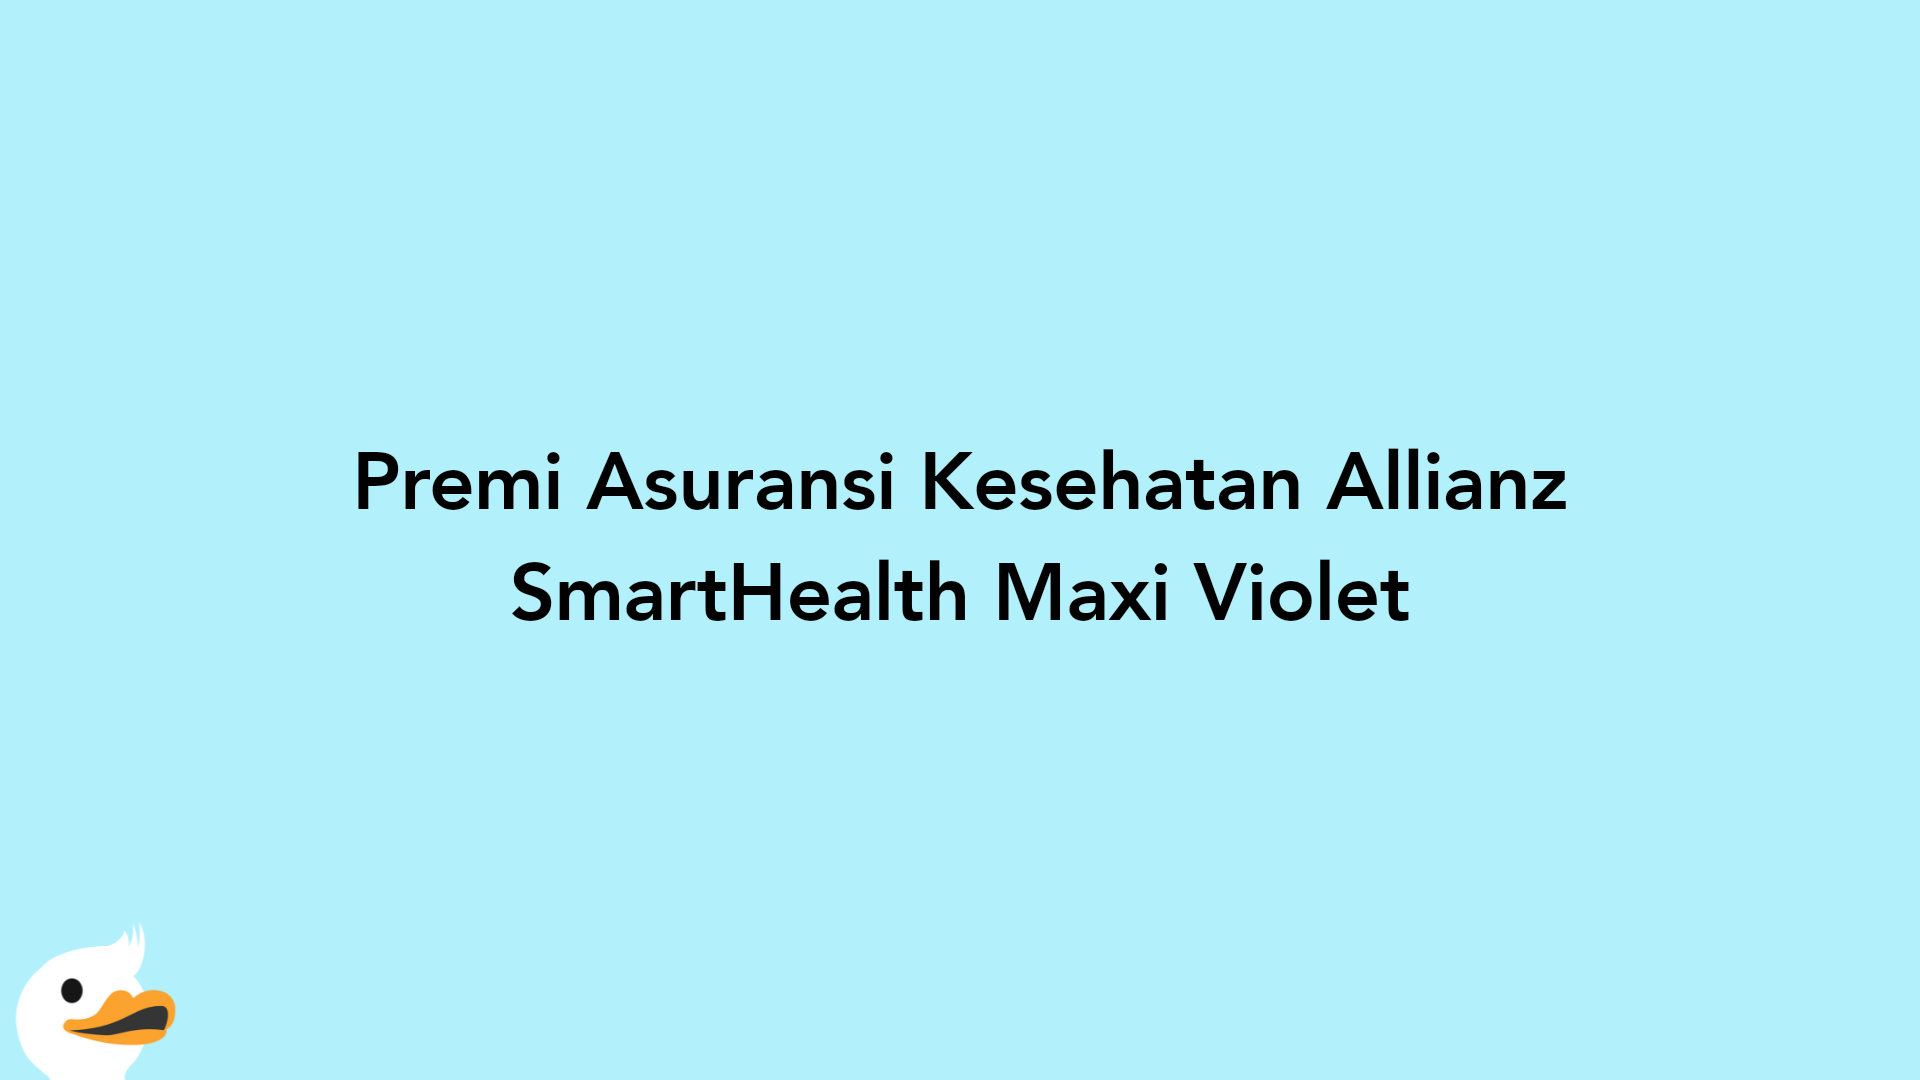 Premi Asuransi Kesehatan Allianz SmartHealth Maxi Violet